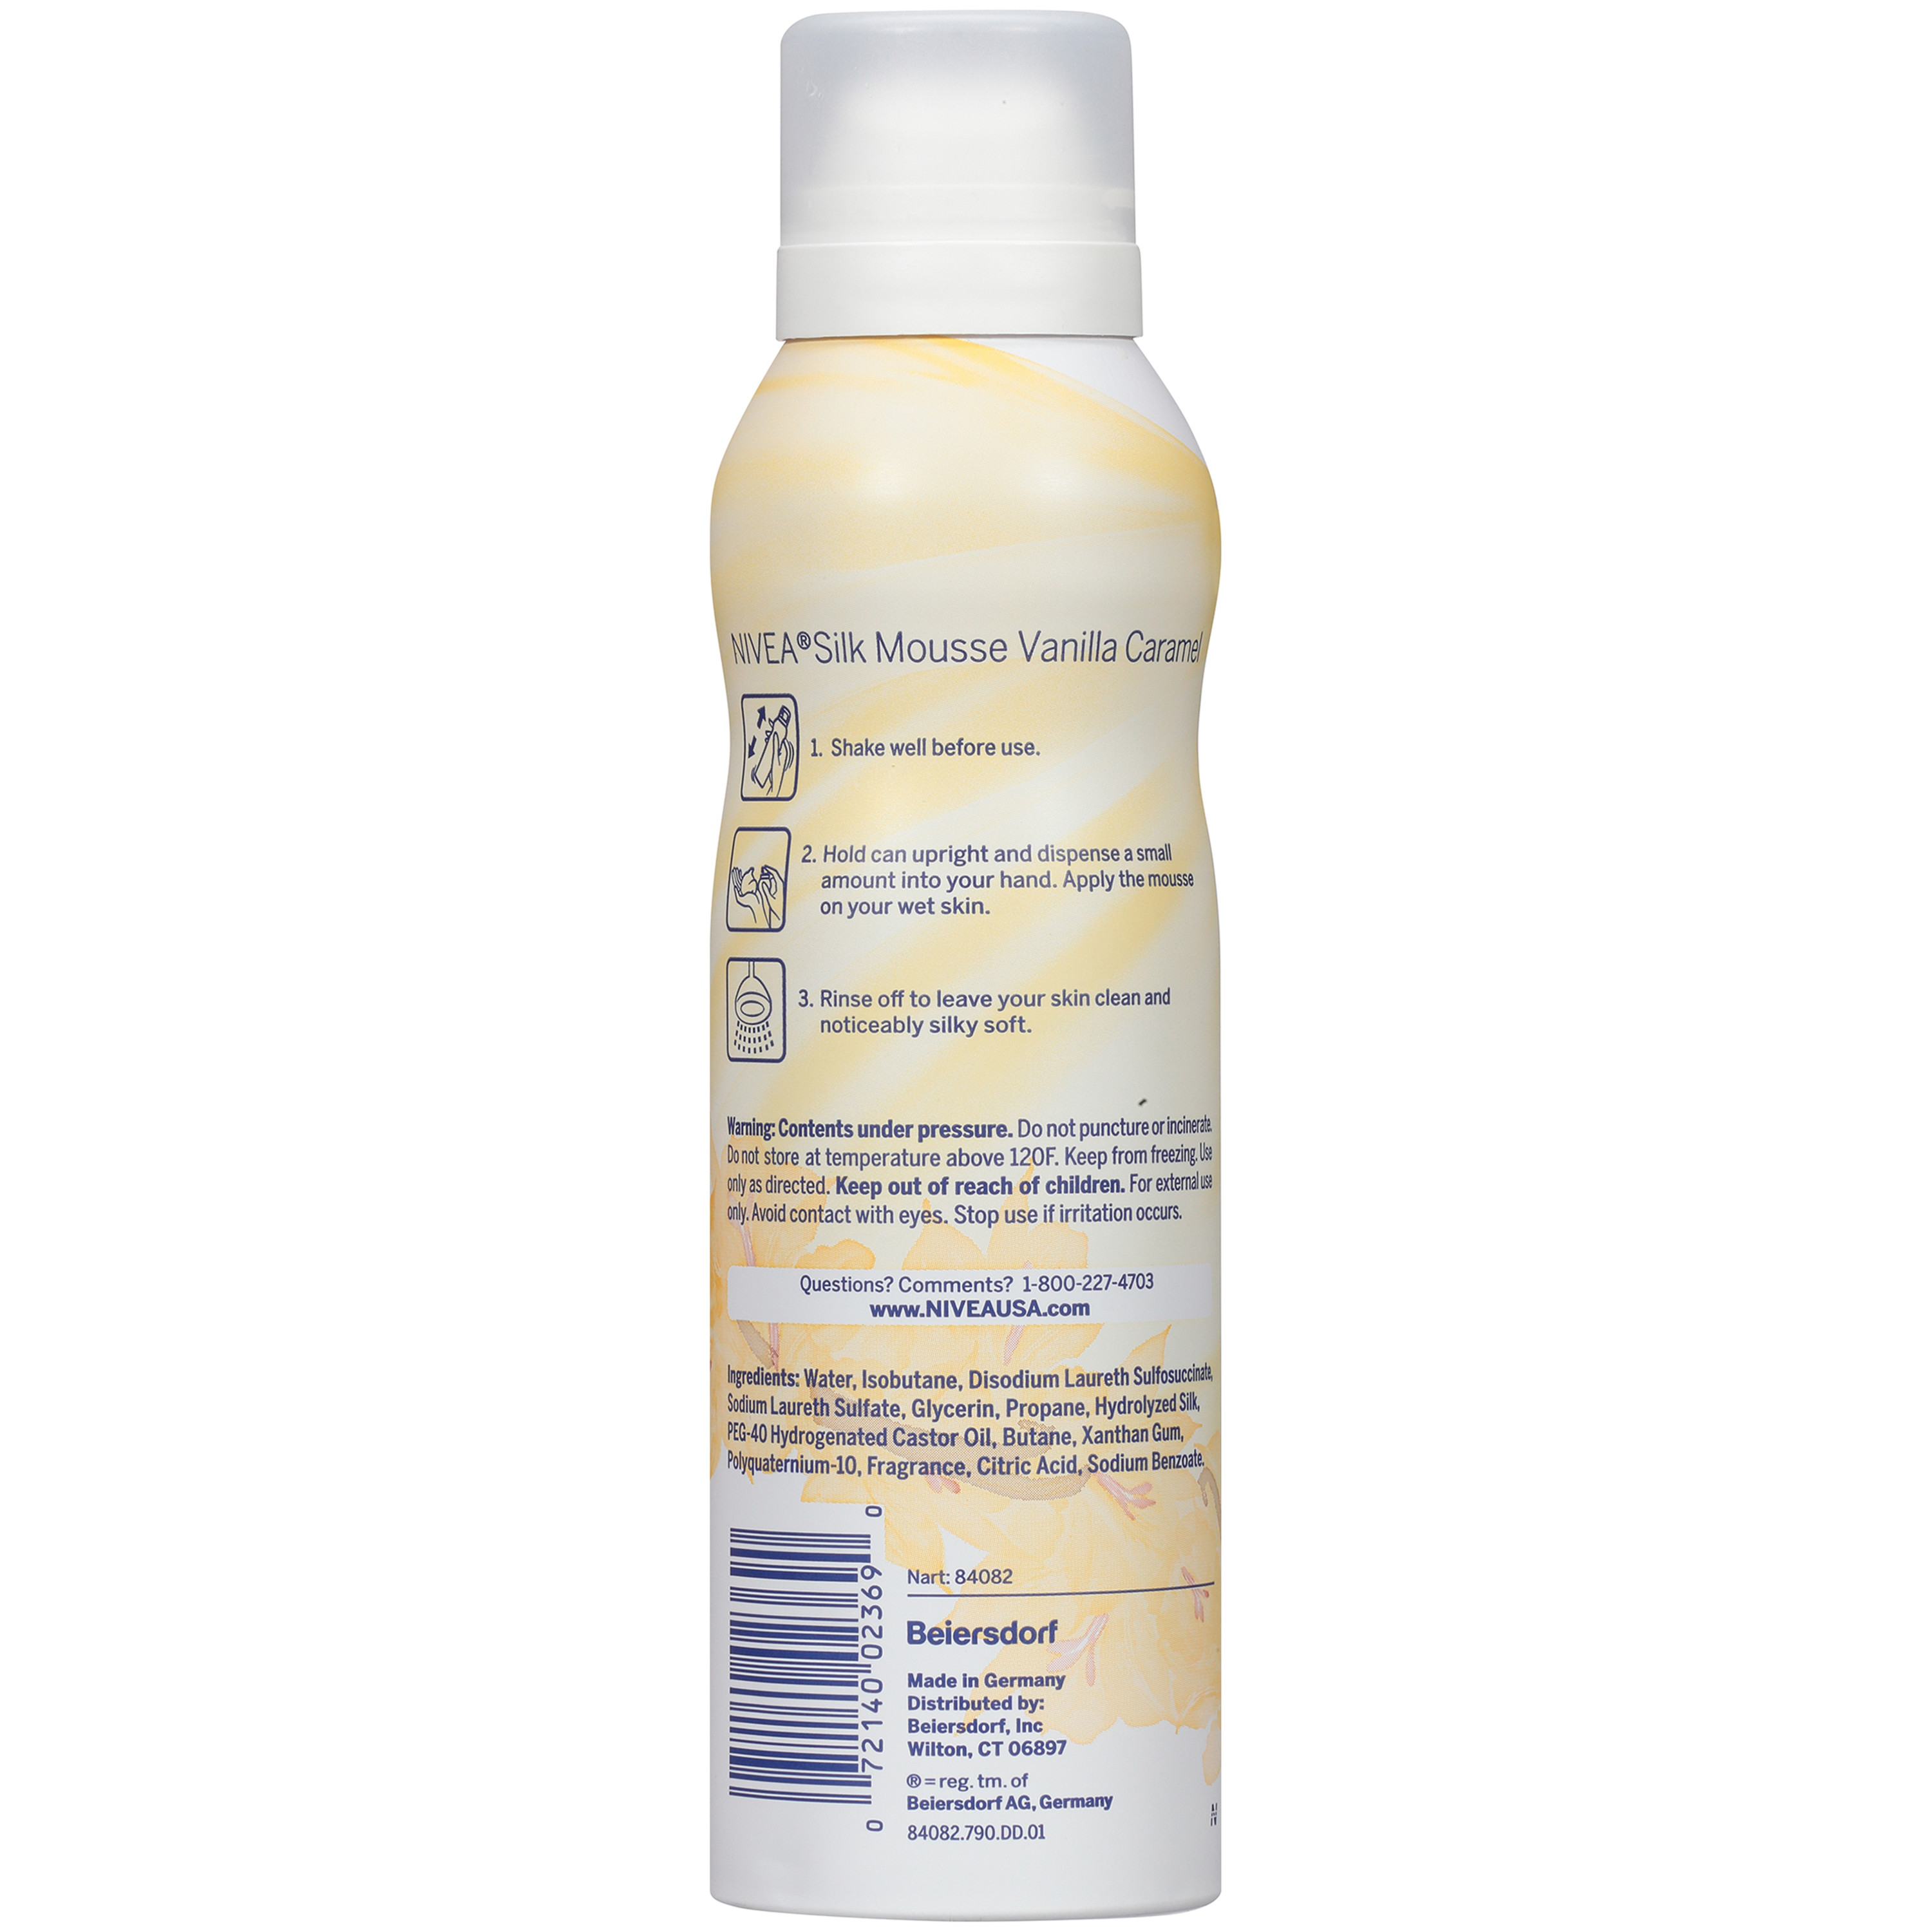 NIVEA Vanilla Caramel Foaming Silk Mousse Body Wash, 6.8 oz. Pump Bottle - image 2 of 4